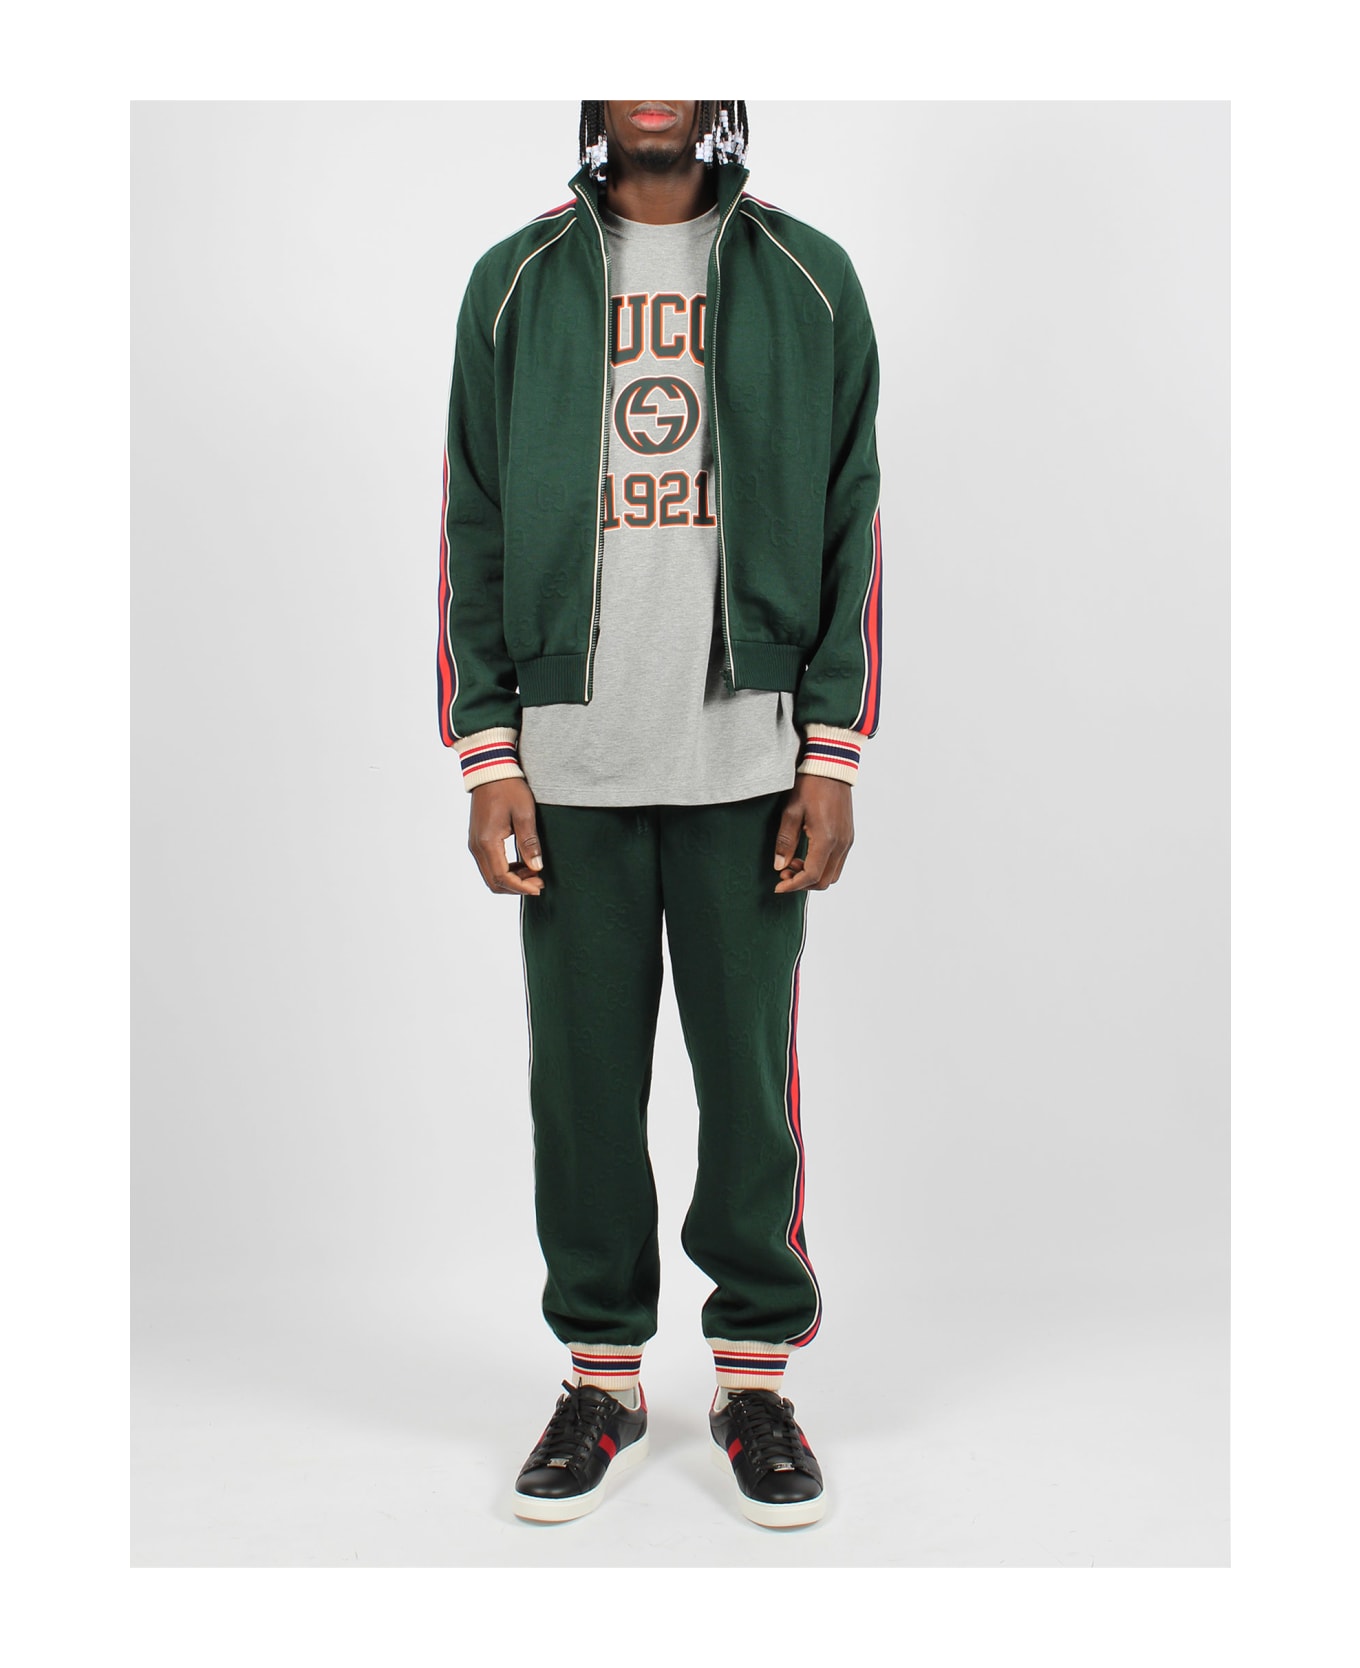 Gucci Gg Jacquard Jersey Zip Jacket - Green